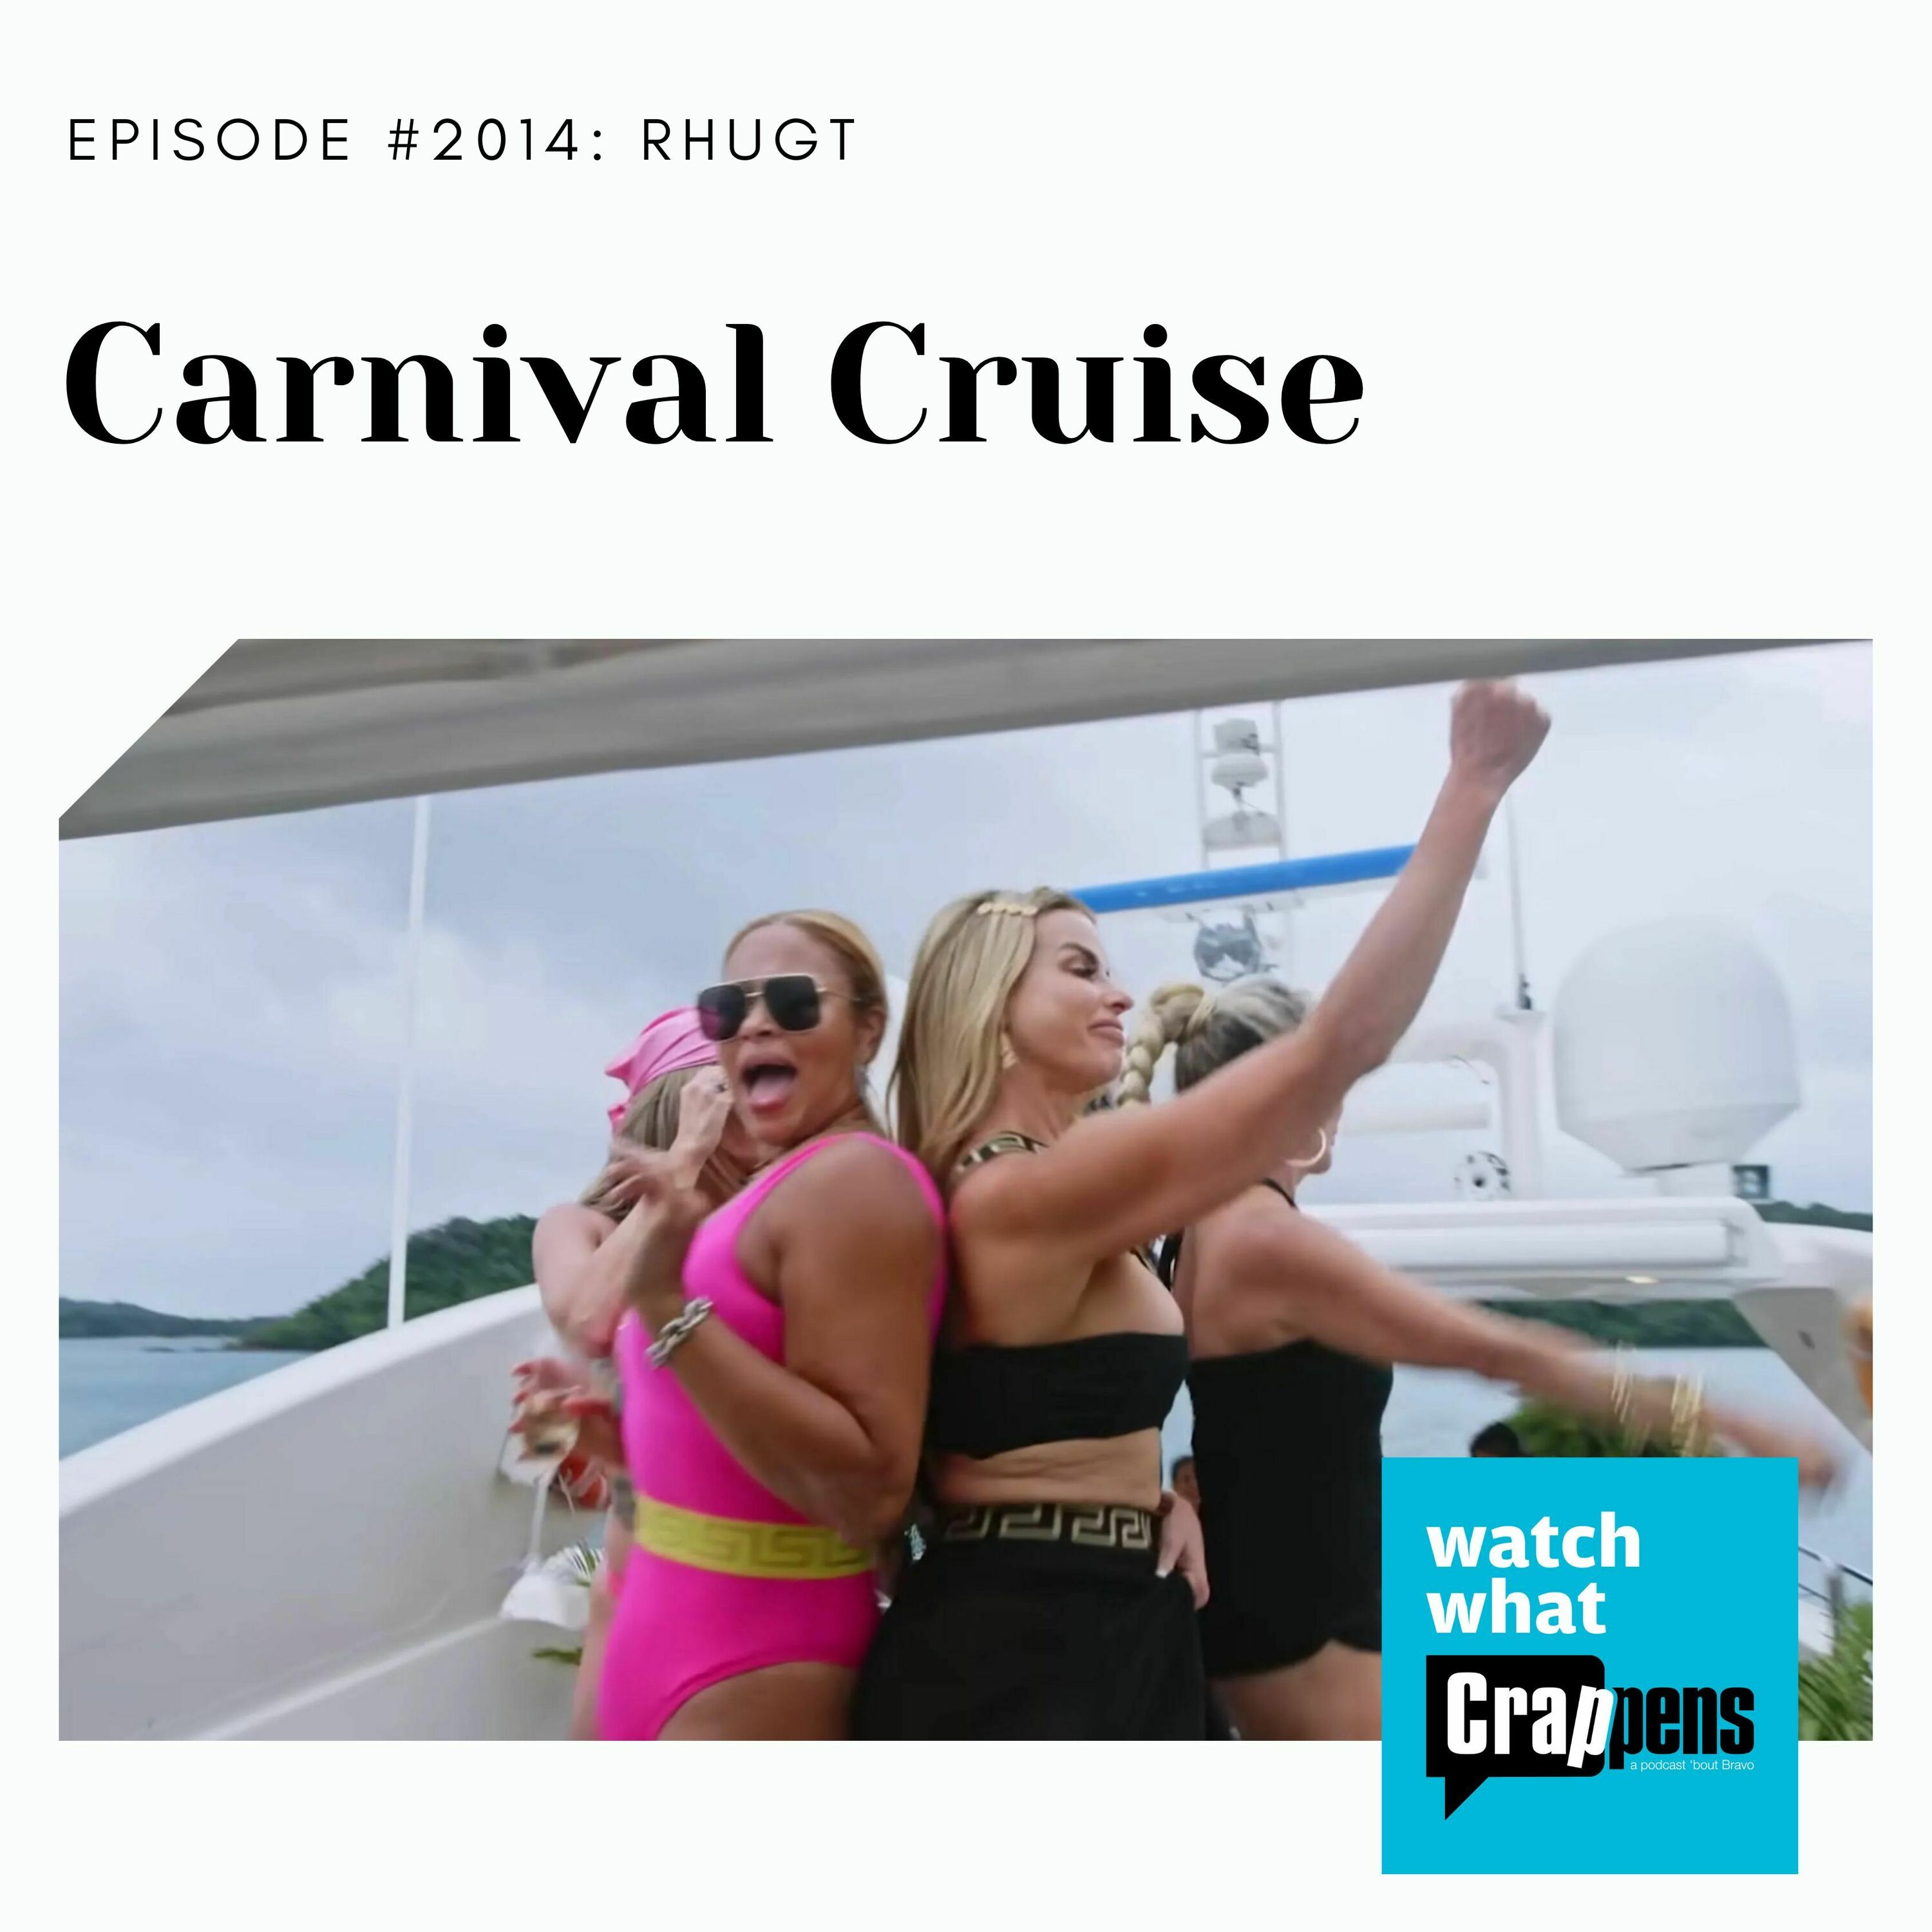 RHUGT: Carnival Cruise